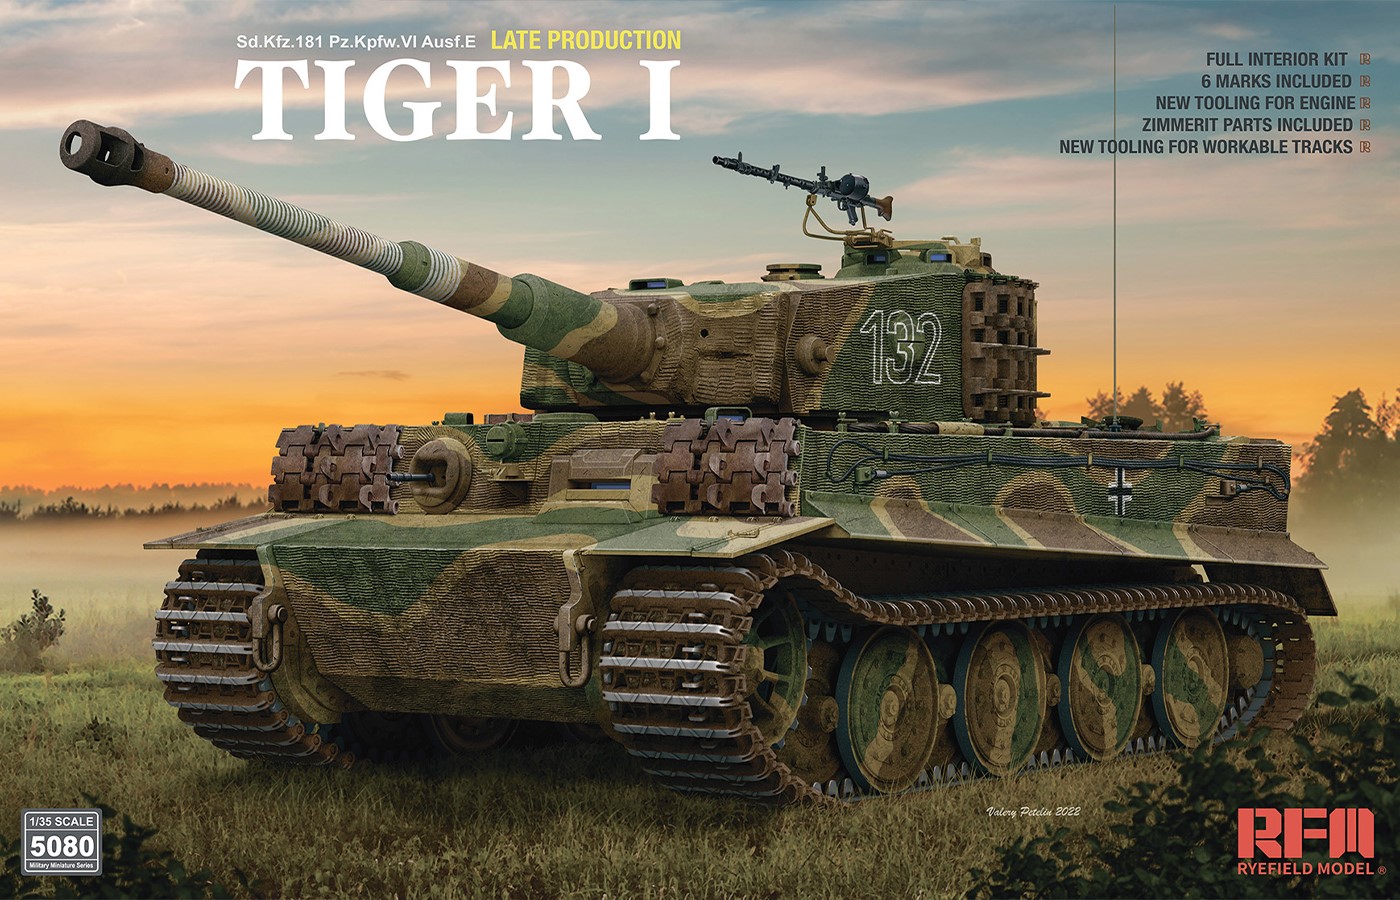 1/35 Sd.Kfz.181 Tiger I Late Production - full interior